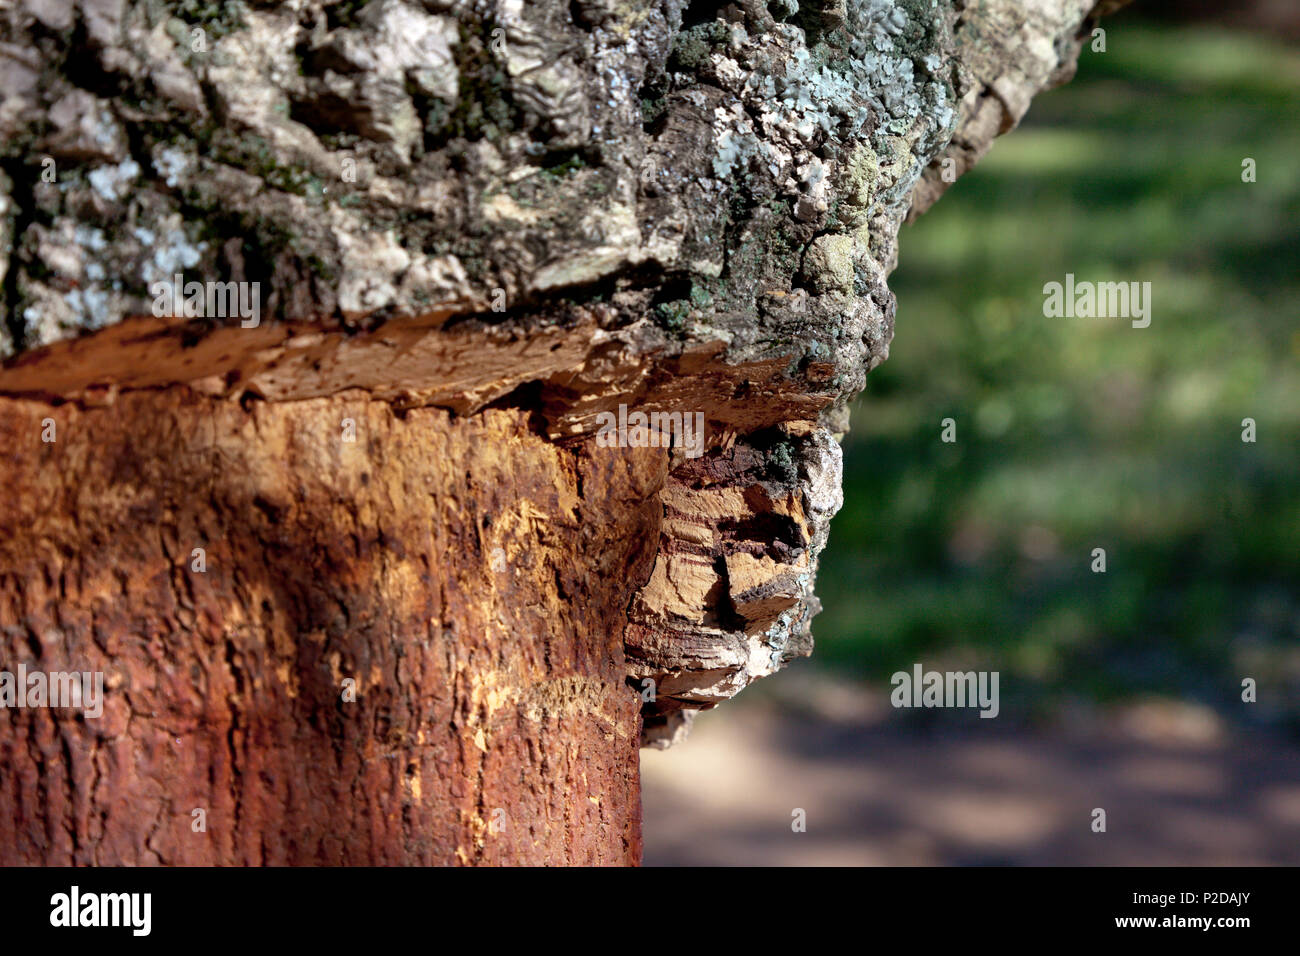 Detail of cork oaks, Alentejo, Portugal Stock Photo